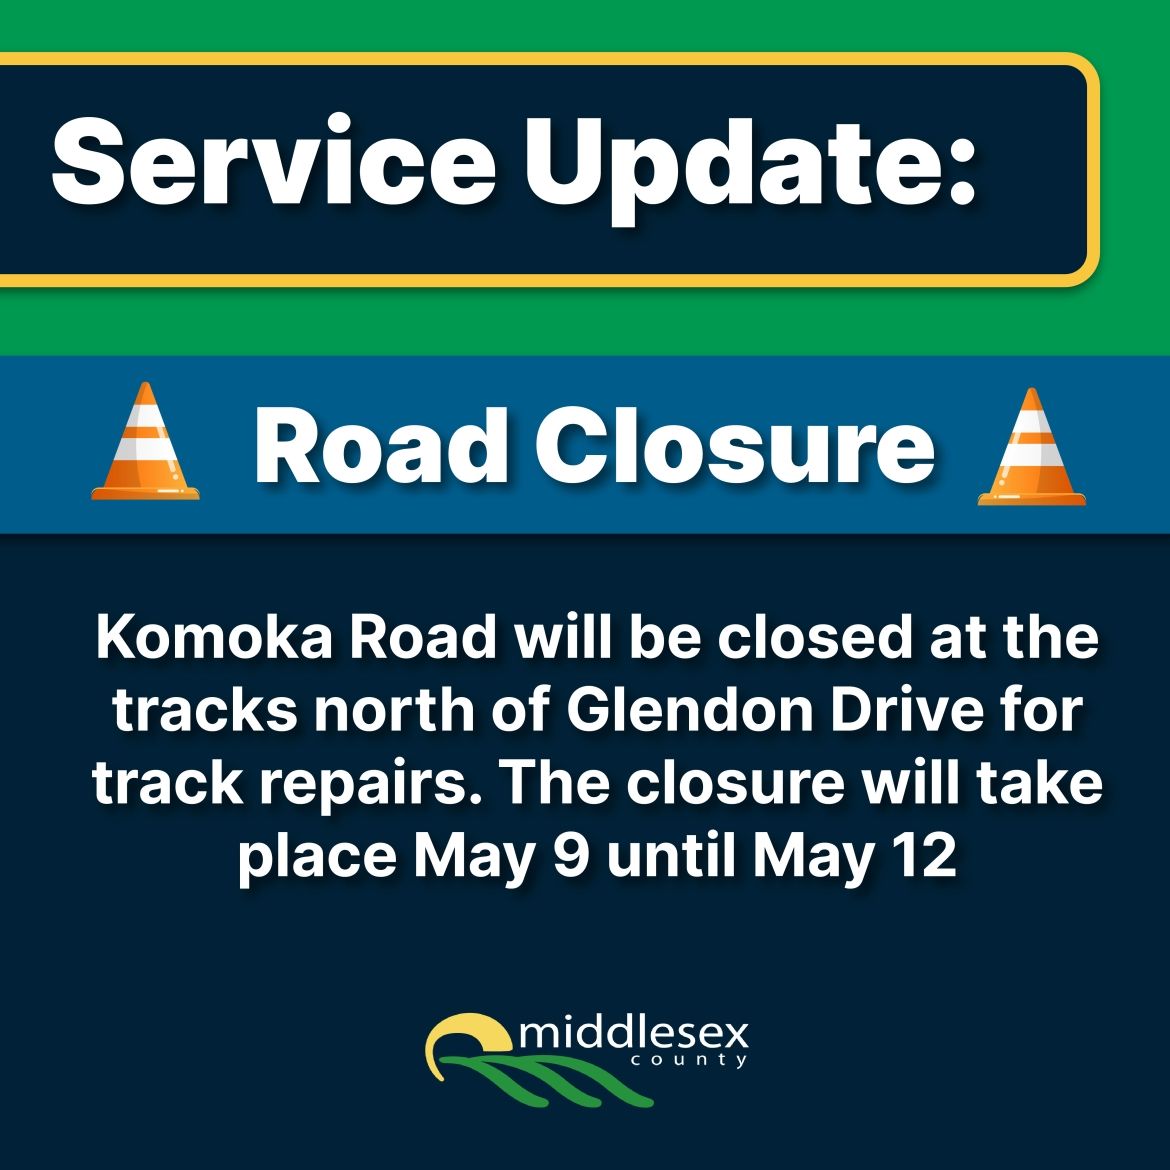 Komoka Road closure 